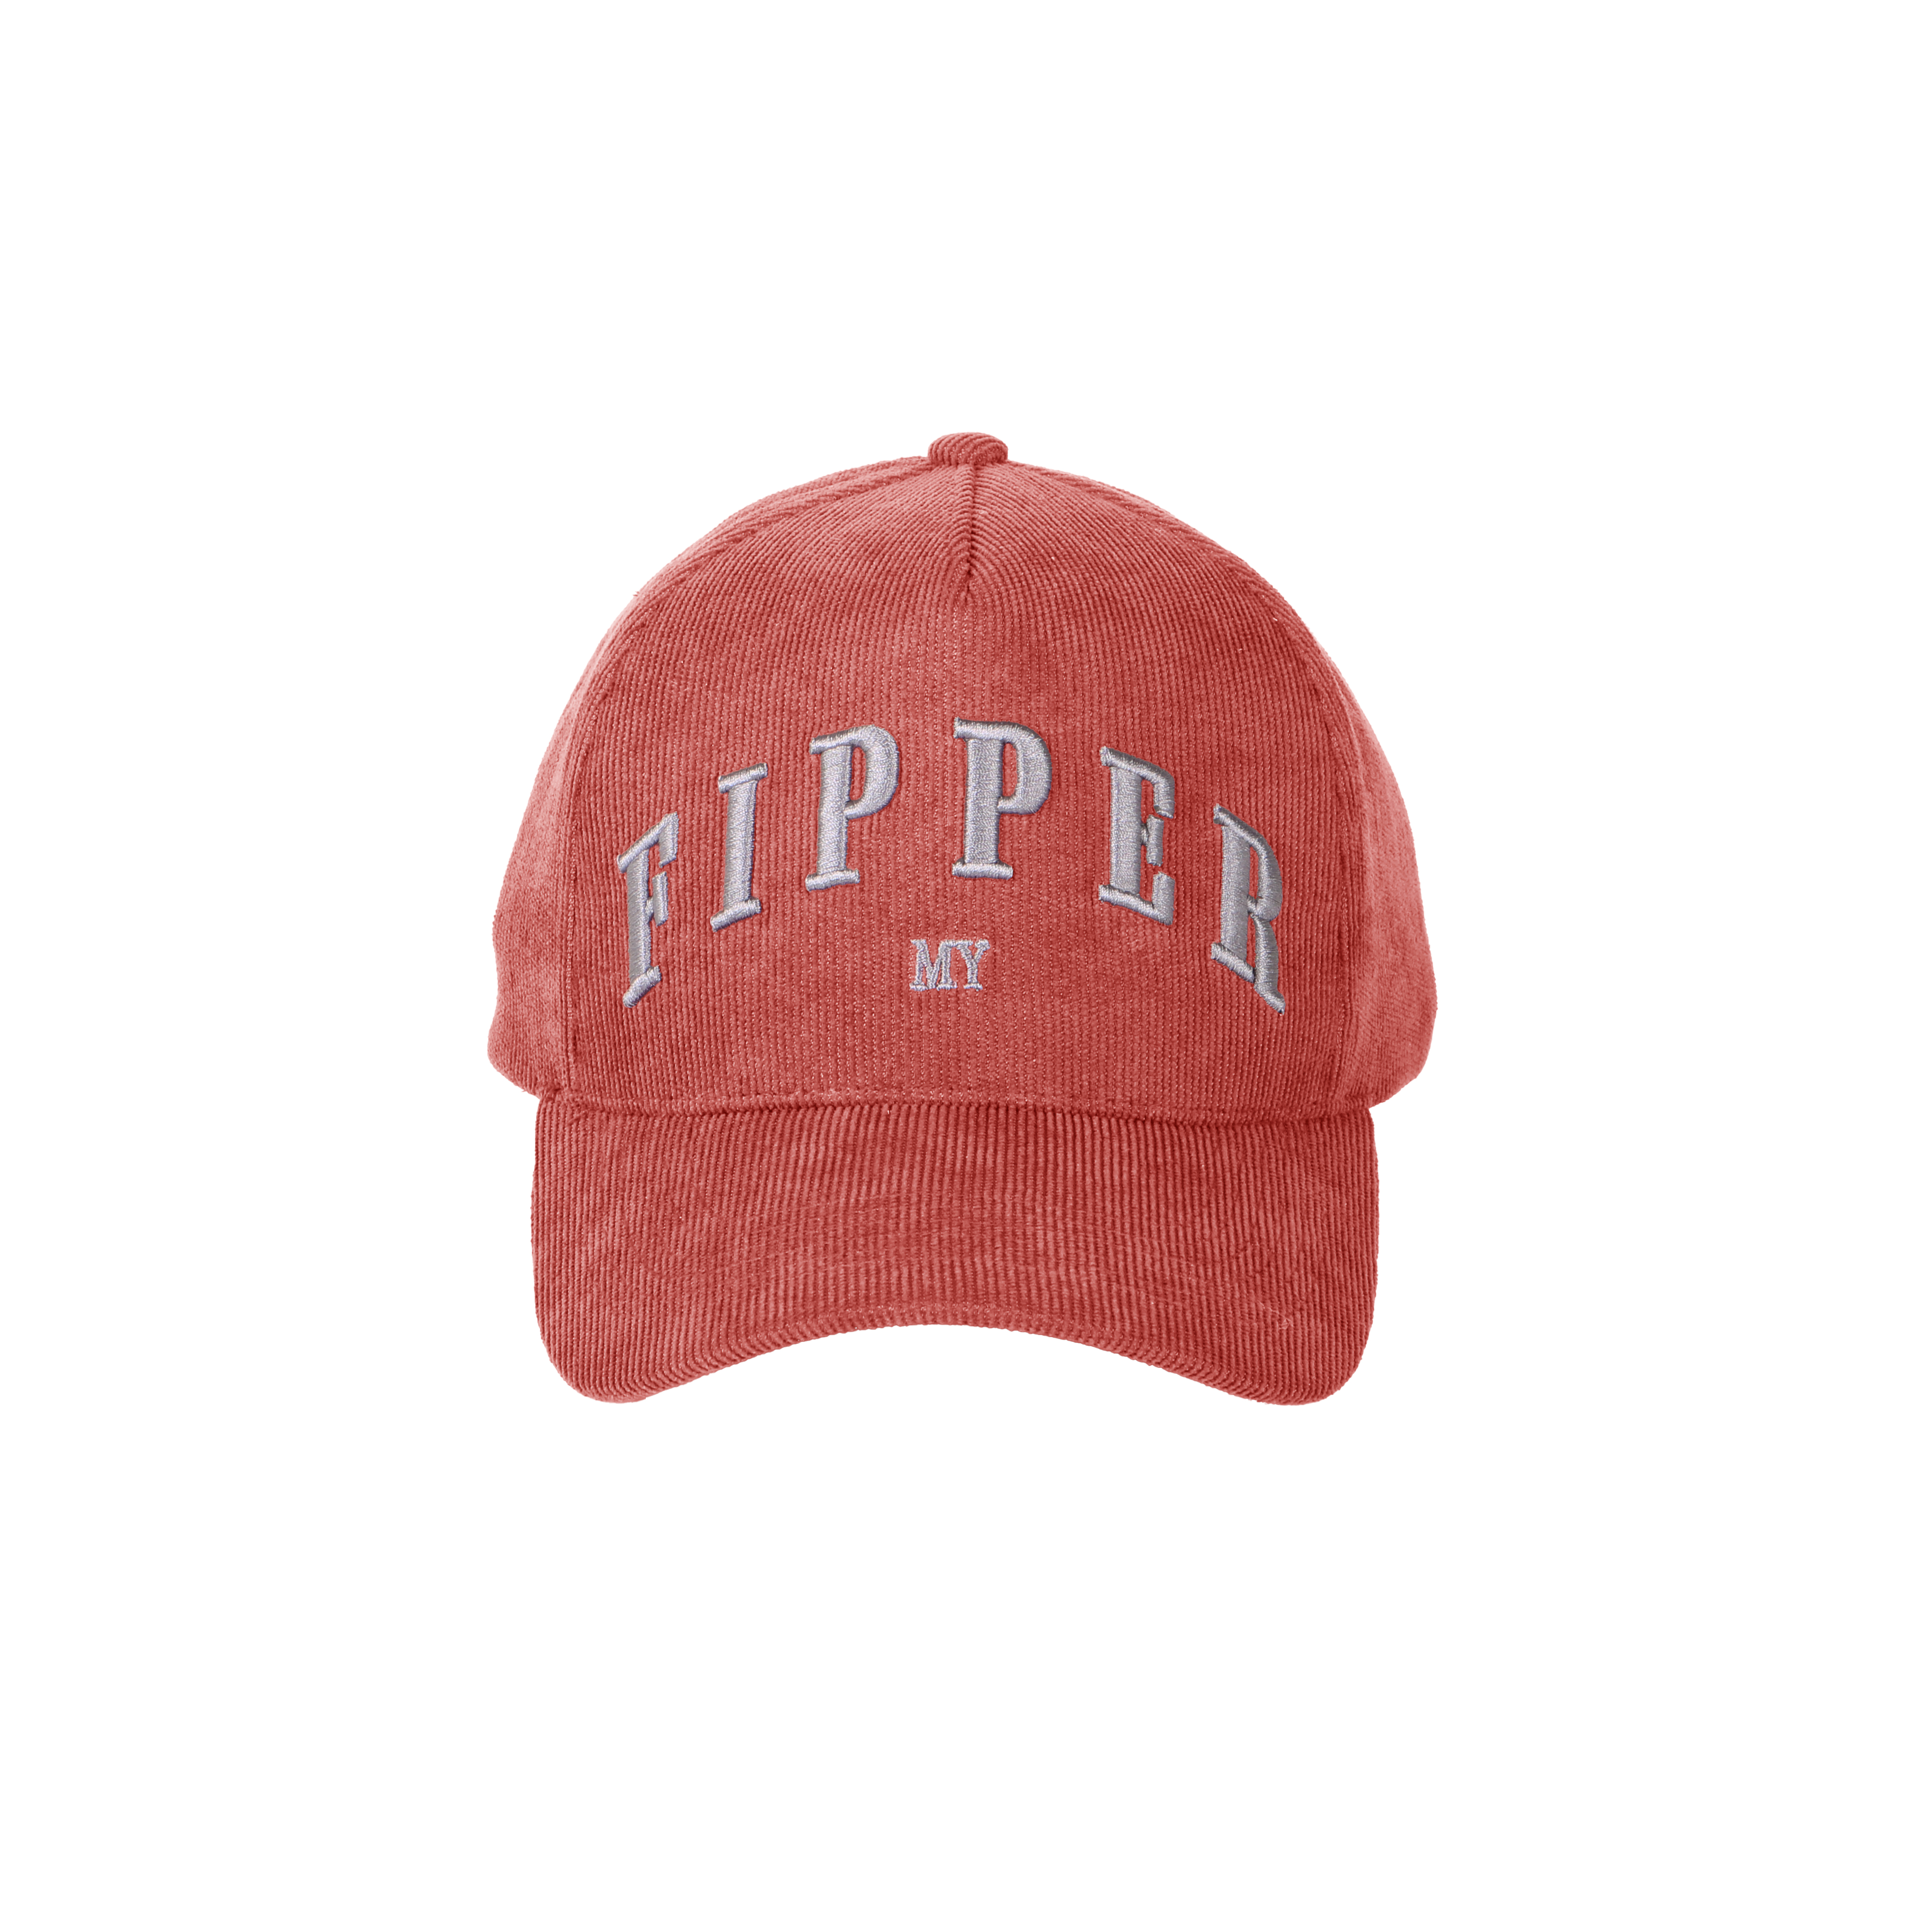 Fipper Headgear Corduroy Adjustable Cap Fipper in Pink (Coral)